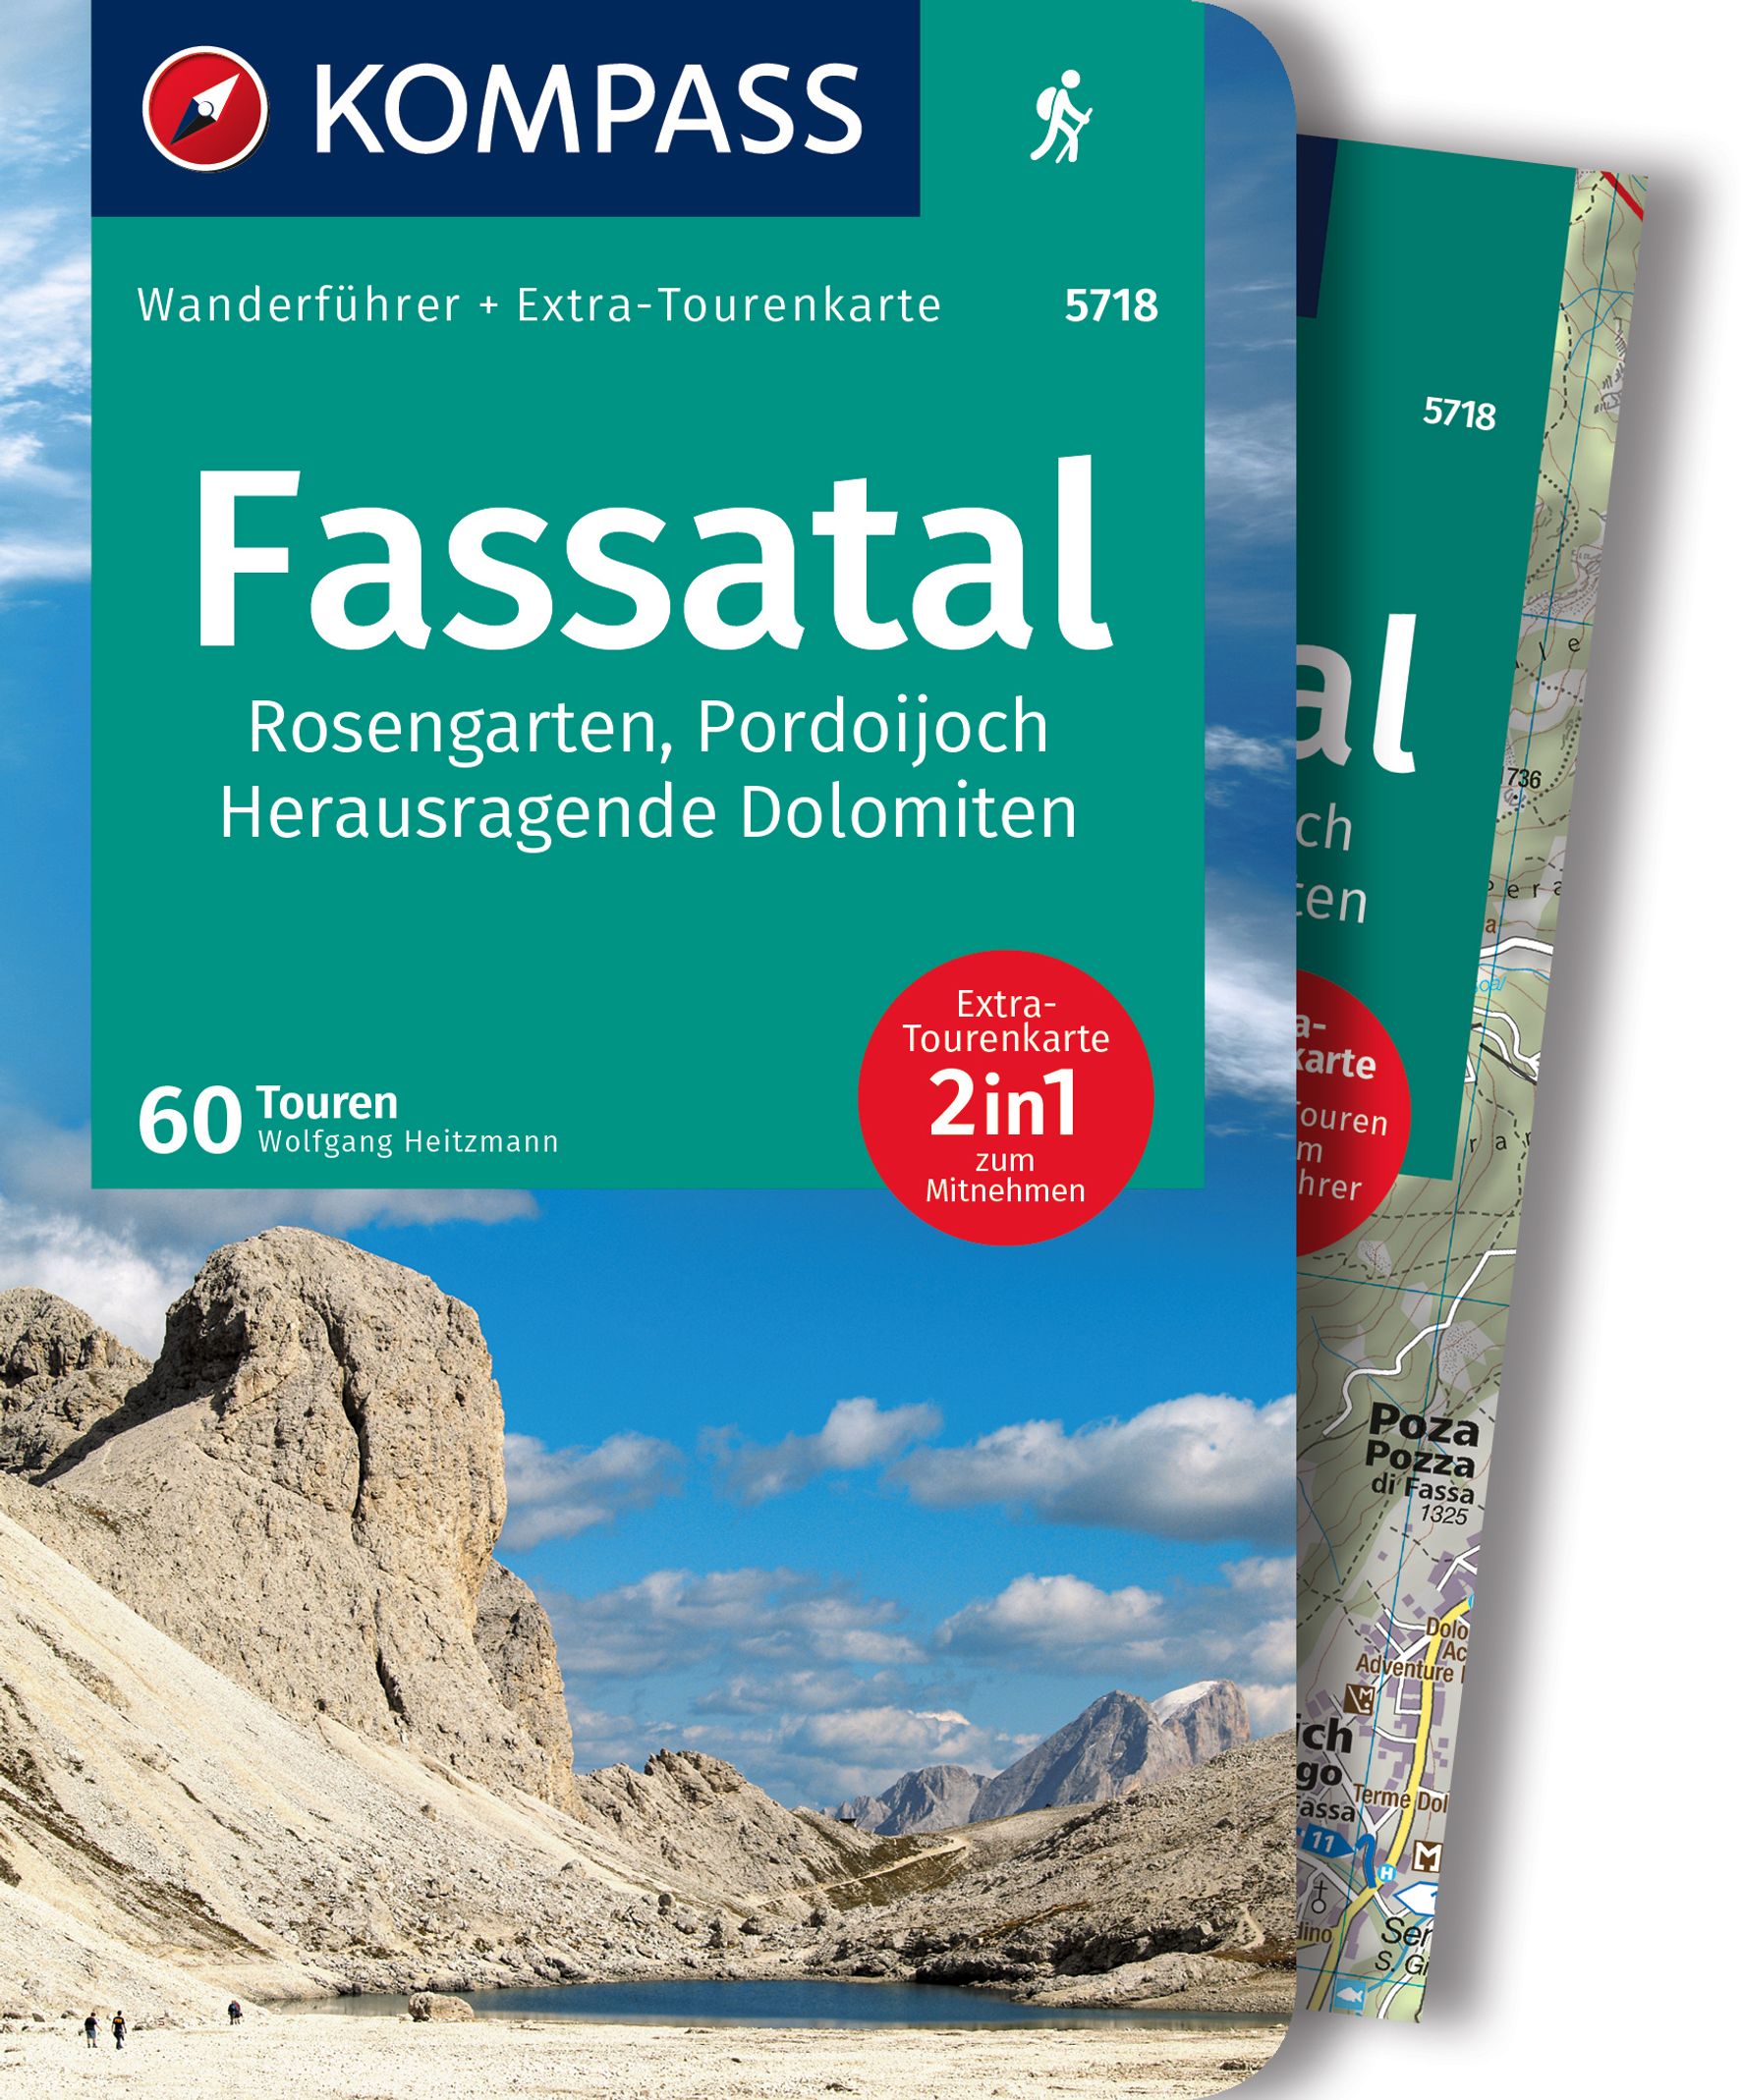 MAIRDUMONT Fassatal, Rosengarten, 60 Touren mit Extra-Tourenkarte